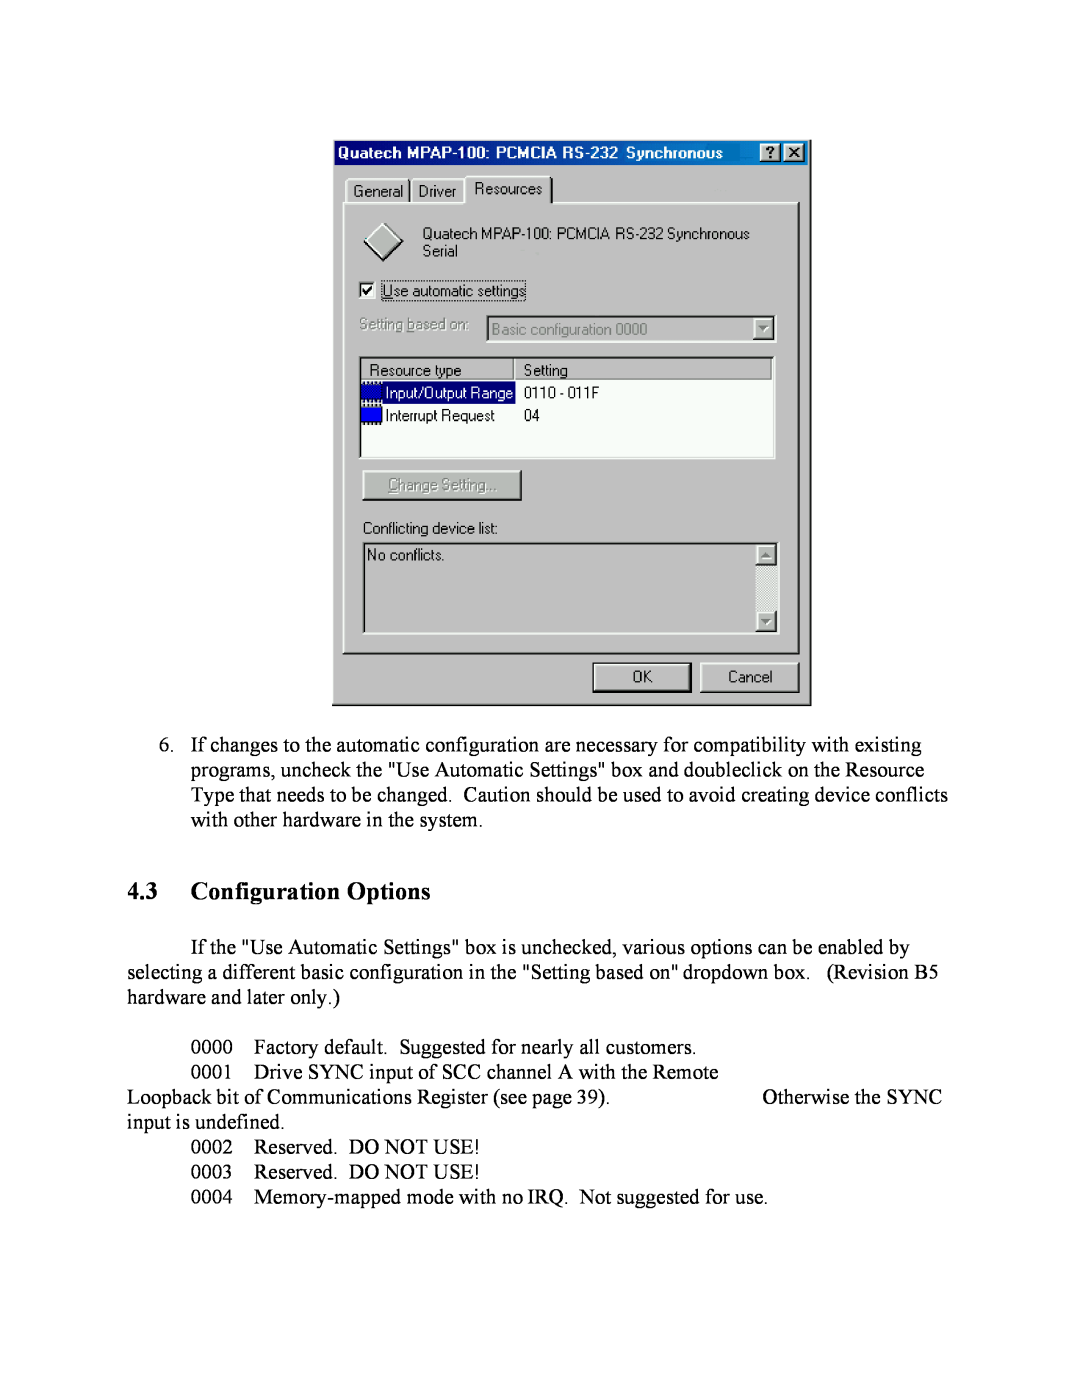 Quatech MPAP-100 user manual Configuration Options 